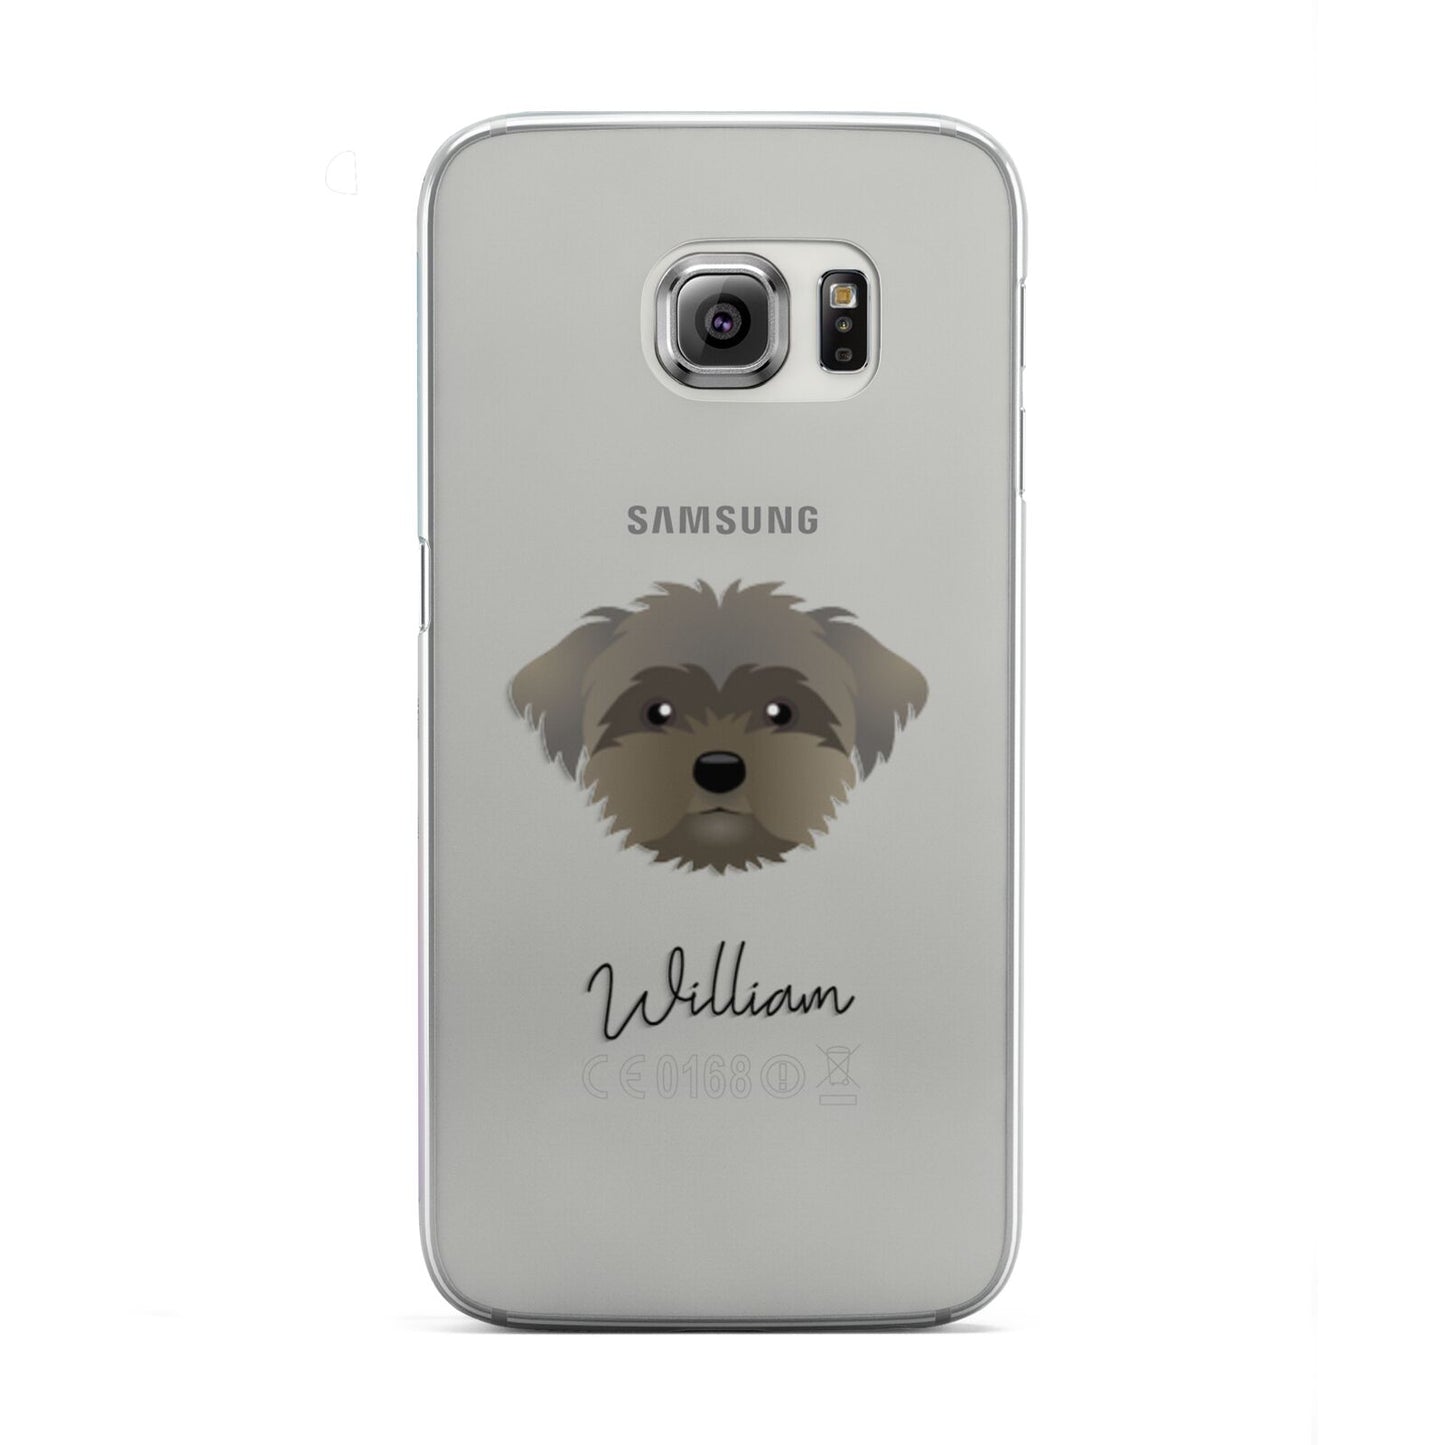 Peek a poo Personalised Samsung Galaxy S6 Edge Case